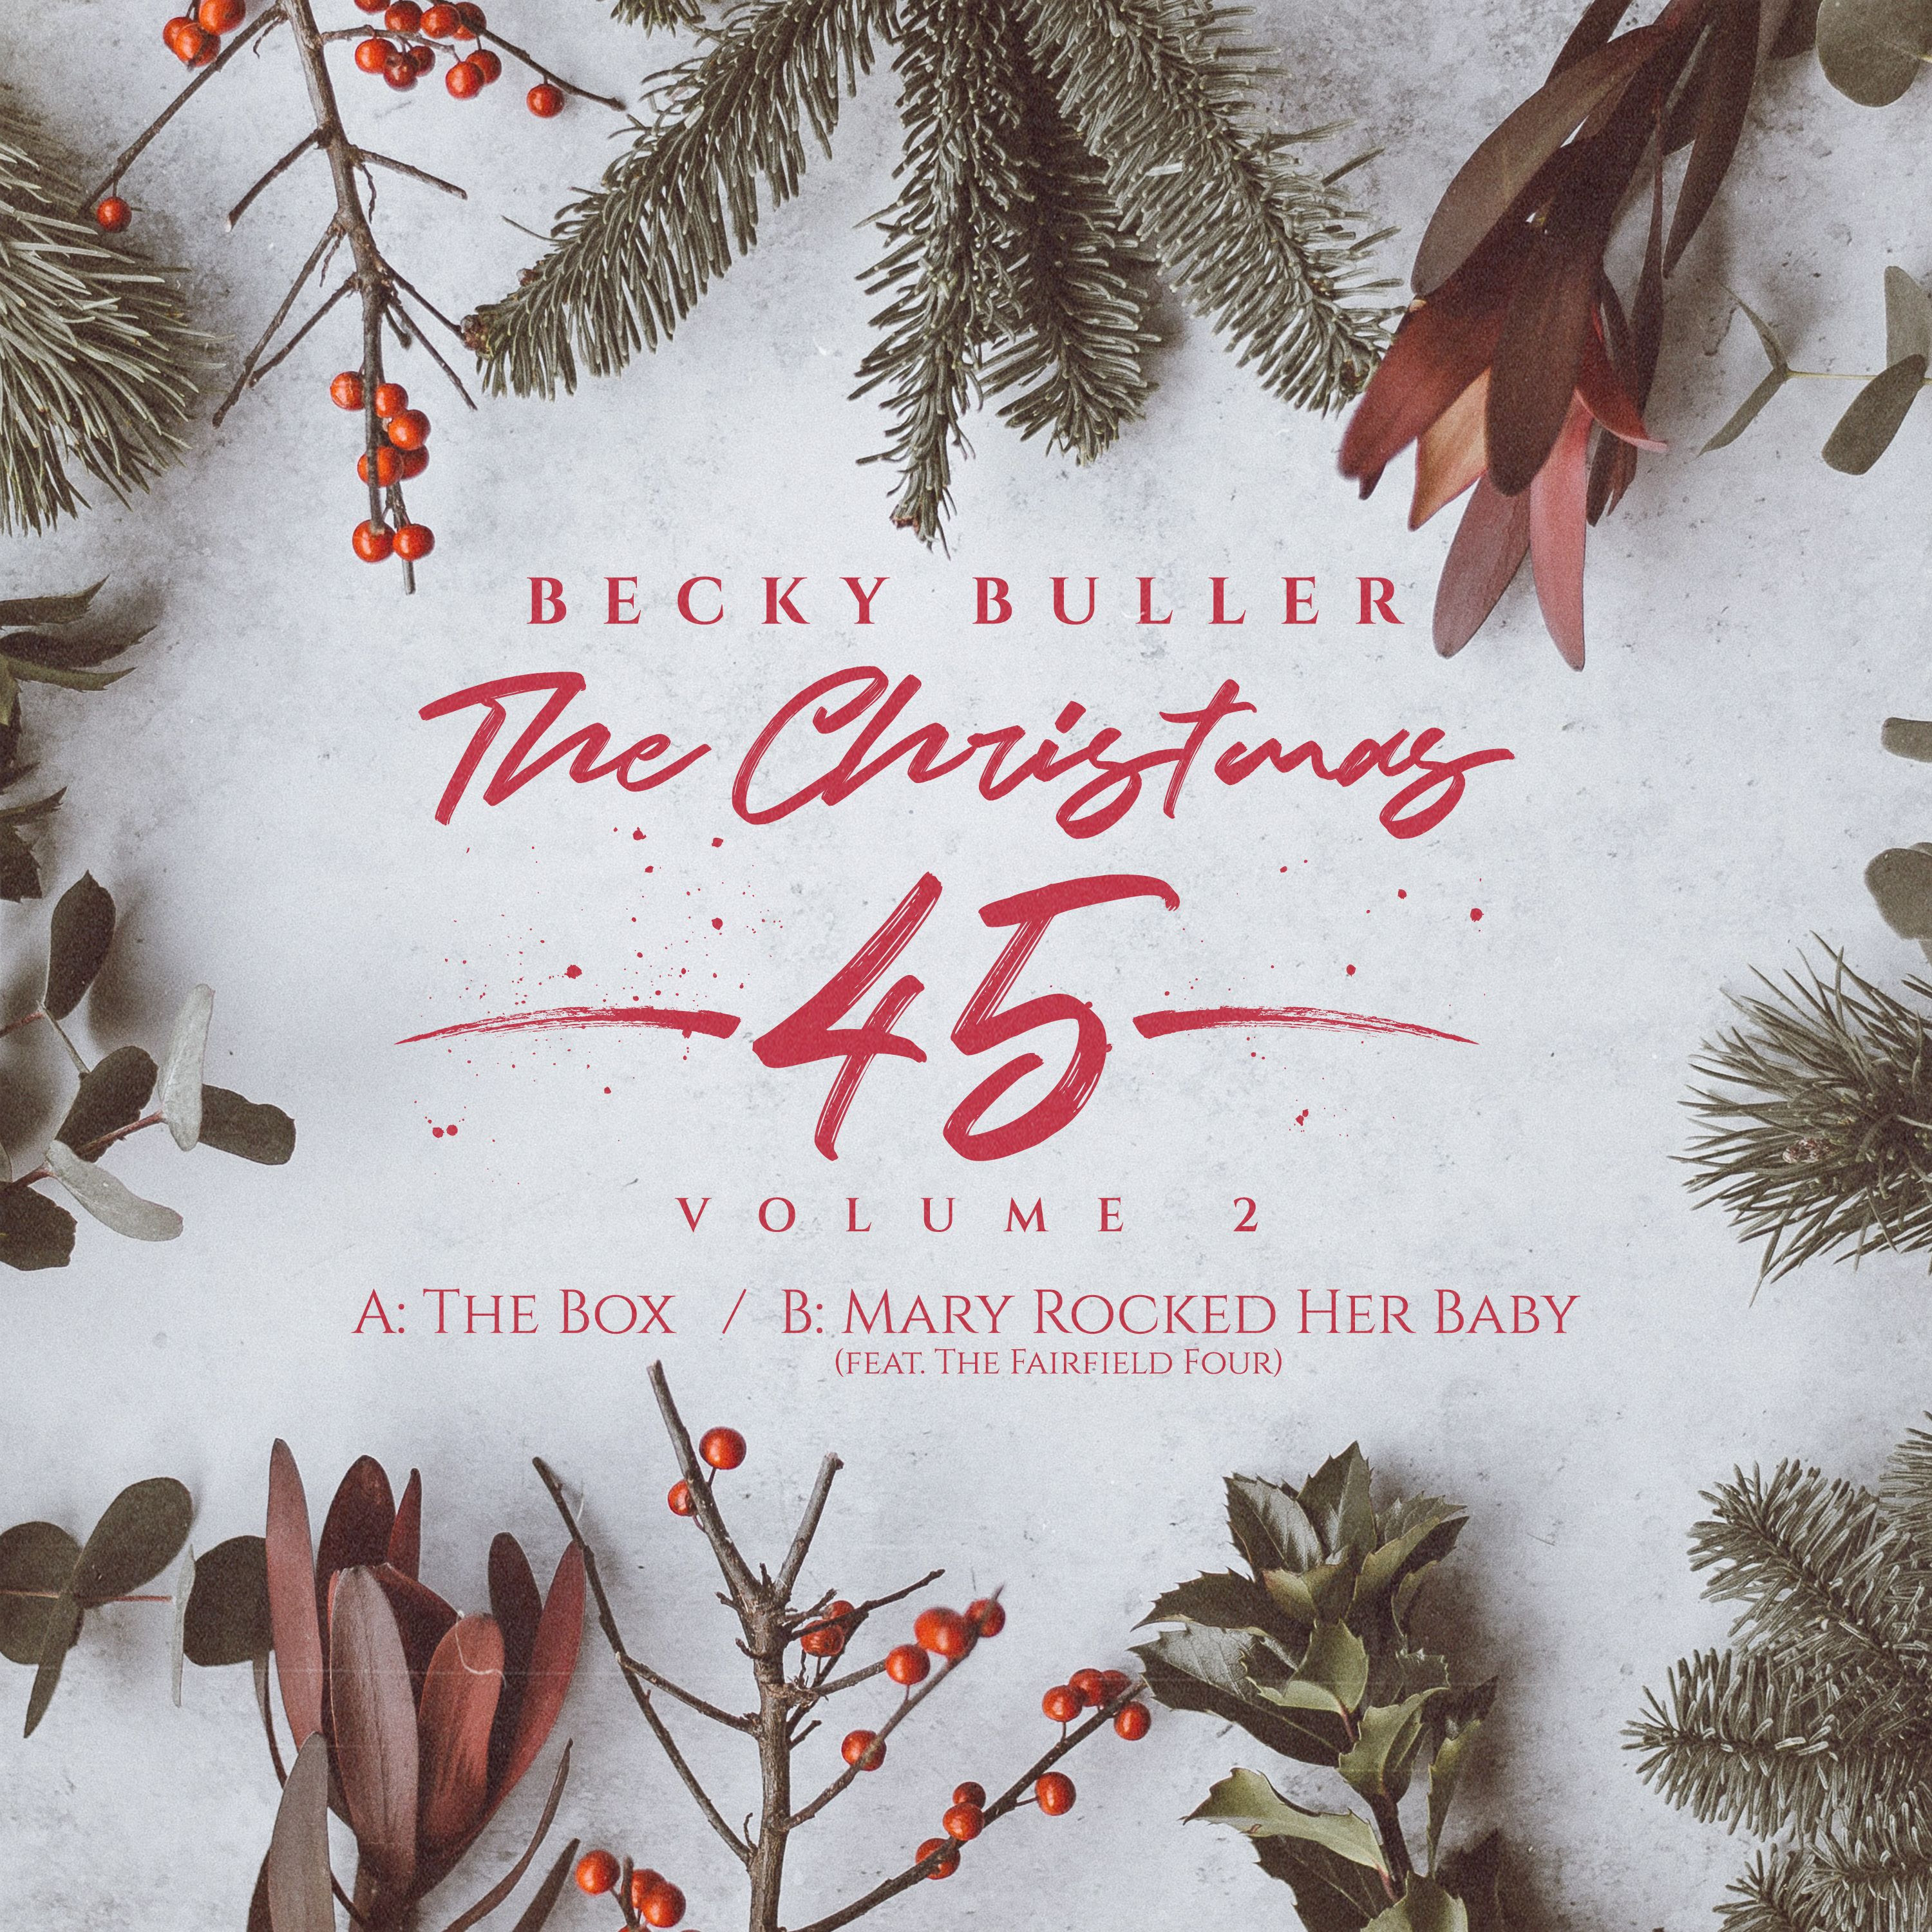 Becky Buller " The Christmas 45, Vol.2" radio release